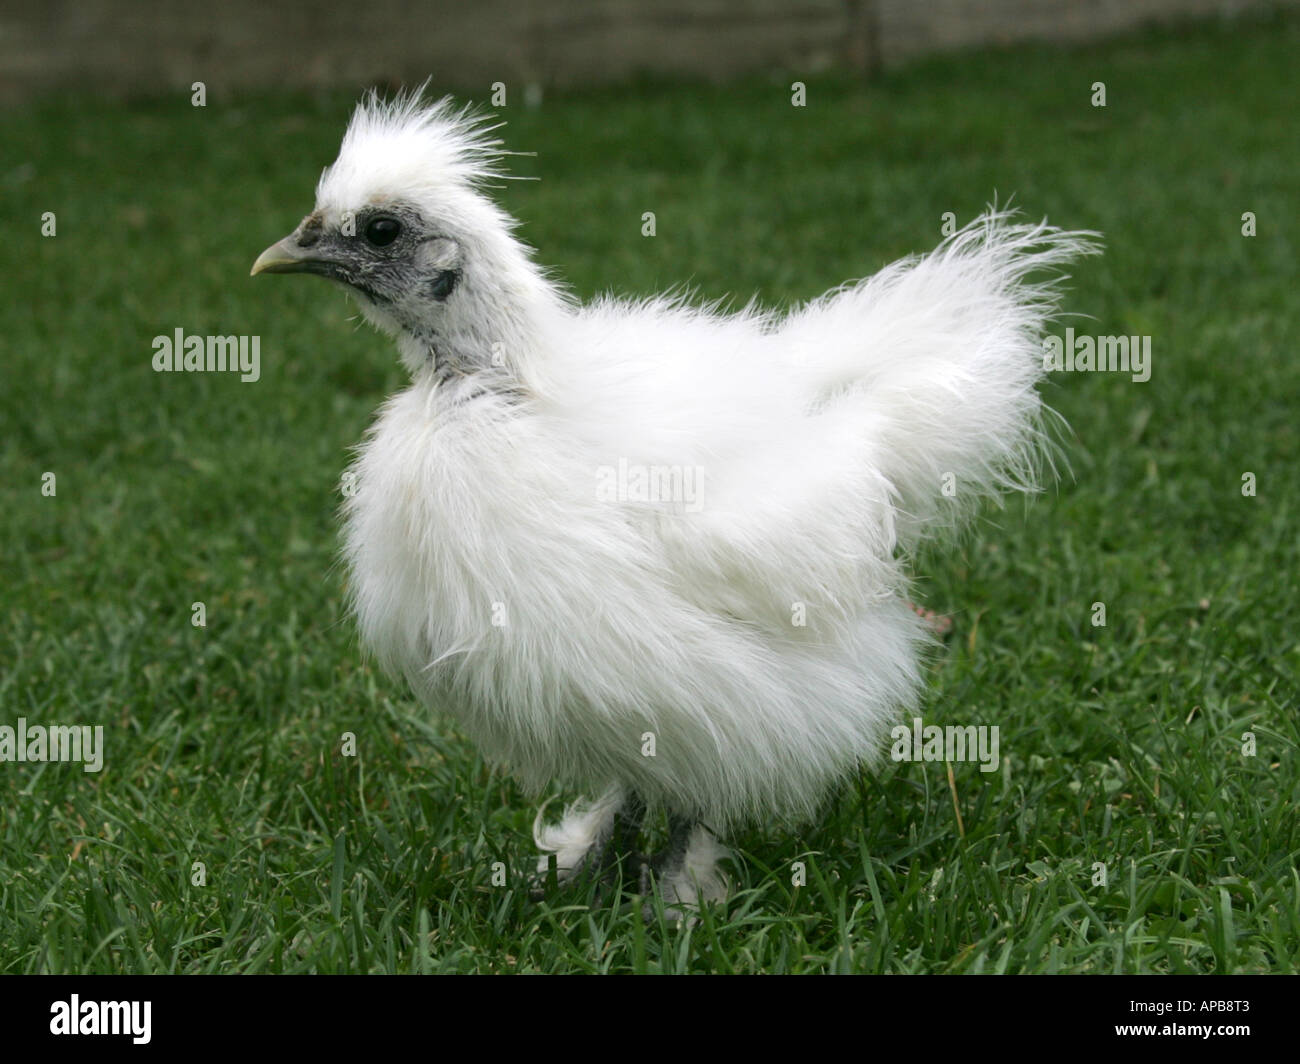 Fancy poultry - a baby bantam. Stock Photo